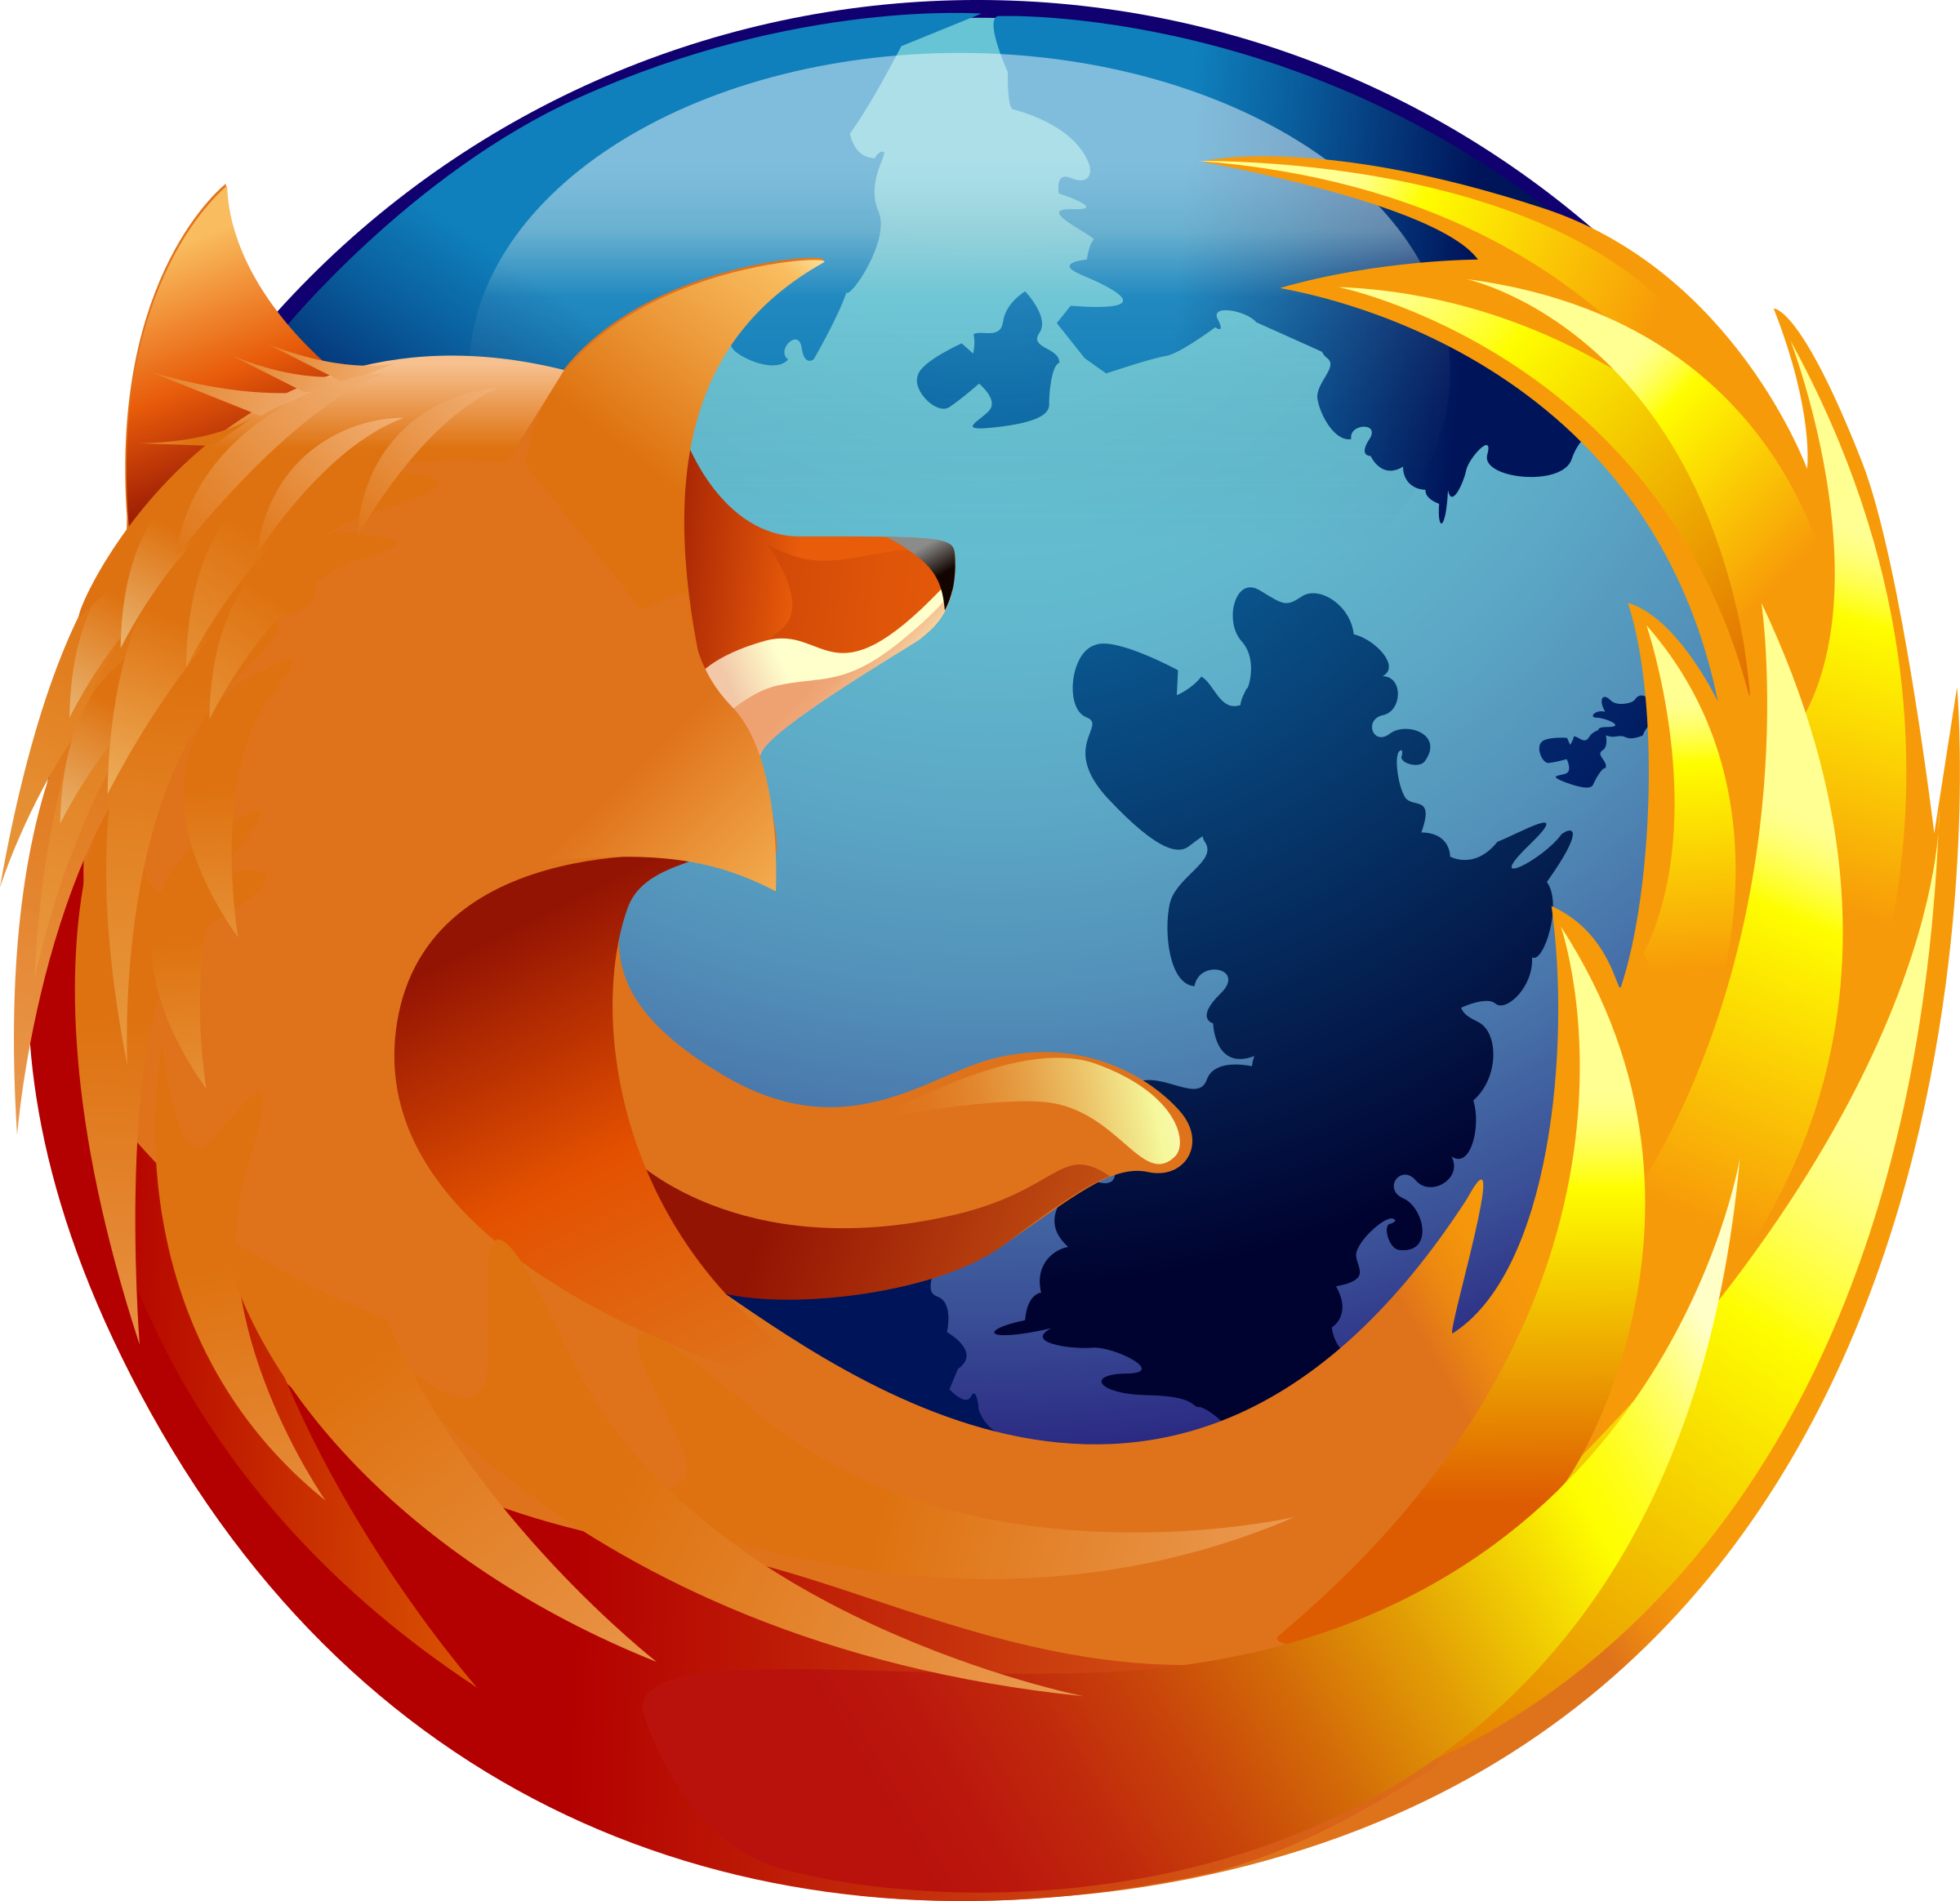 Firefox: The Digital Surfer’s Trusty Ride